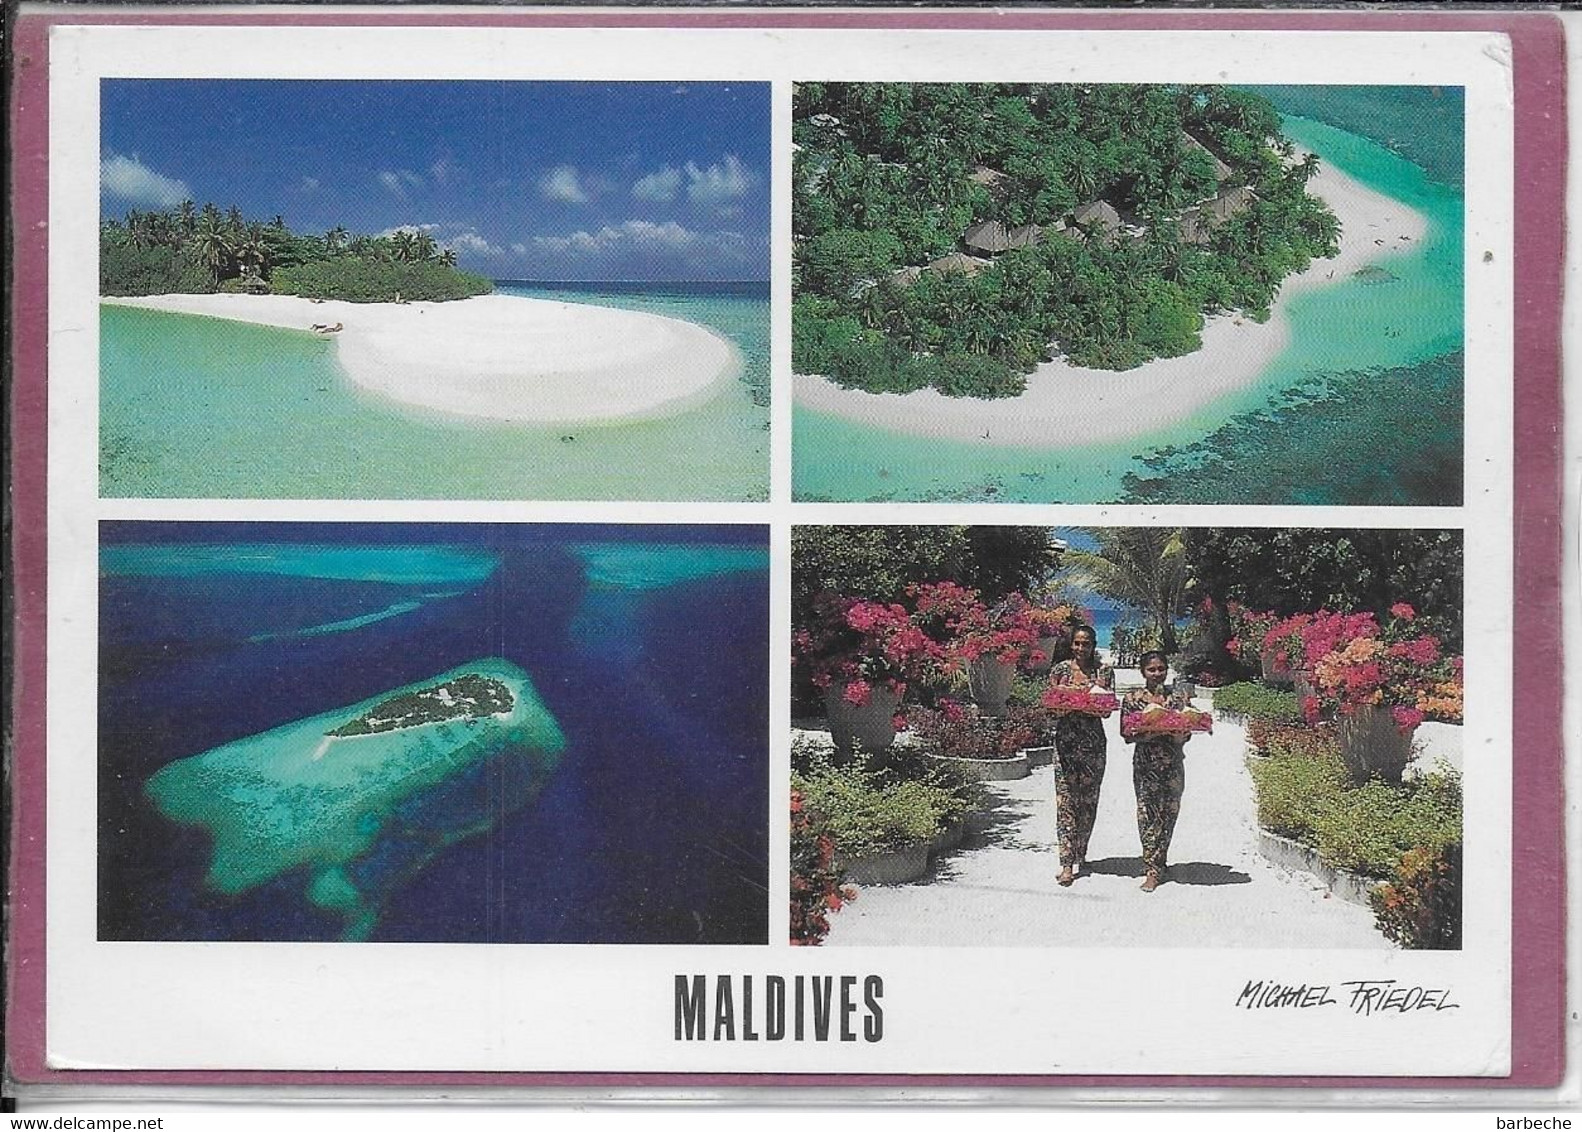 MALDIVES - Embudu - Maldives